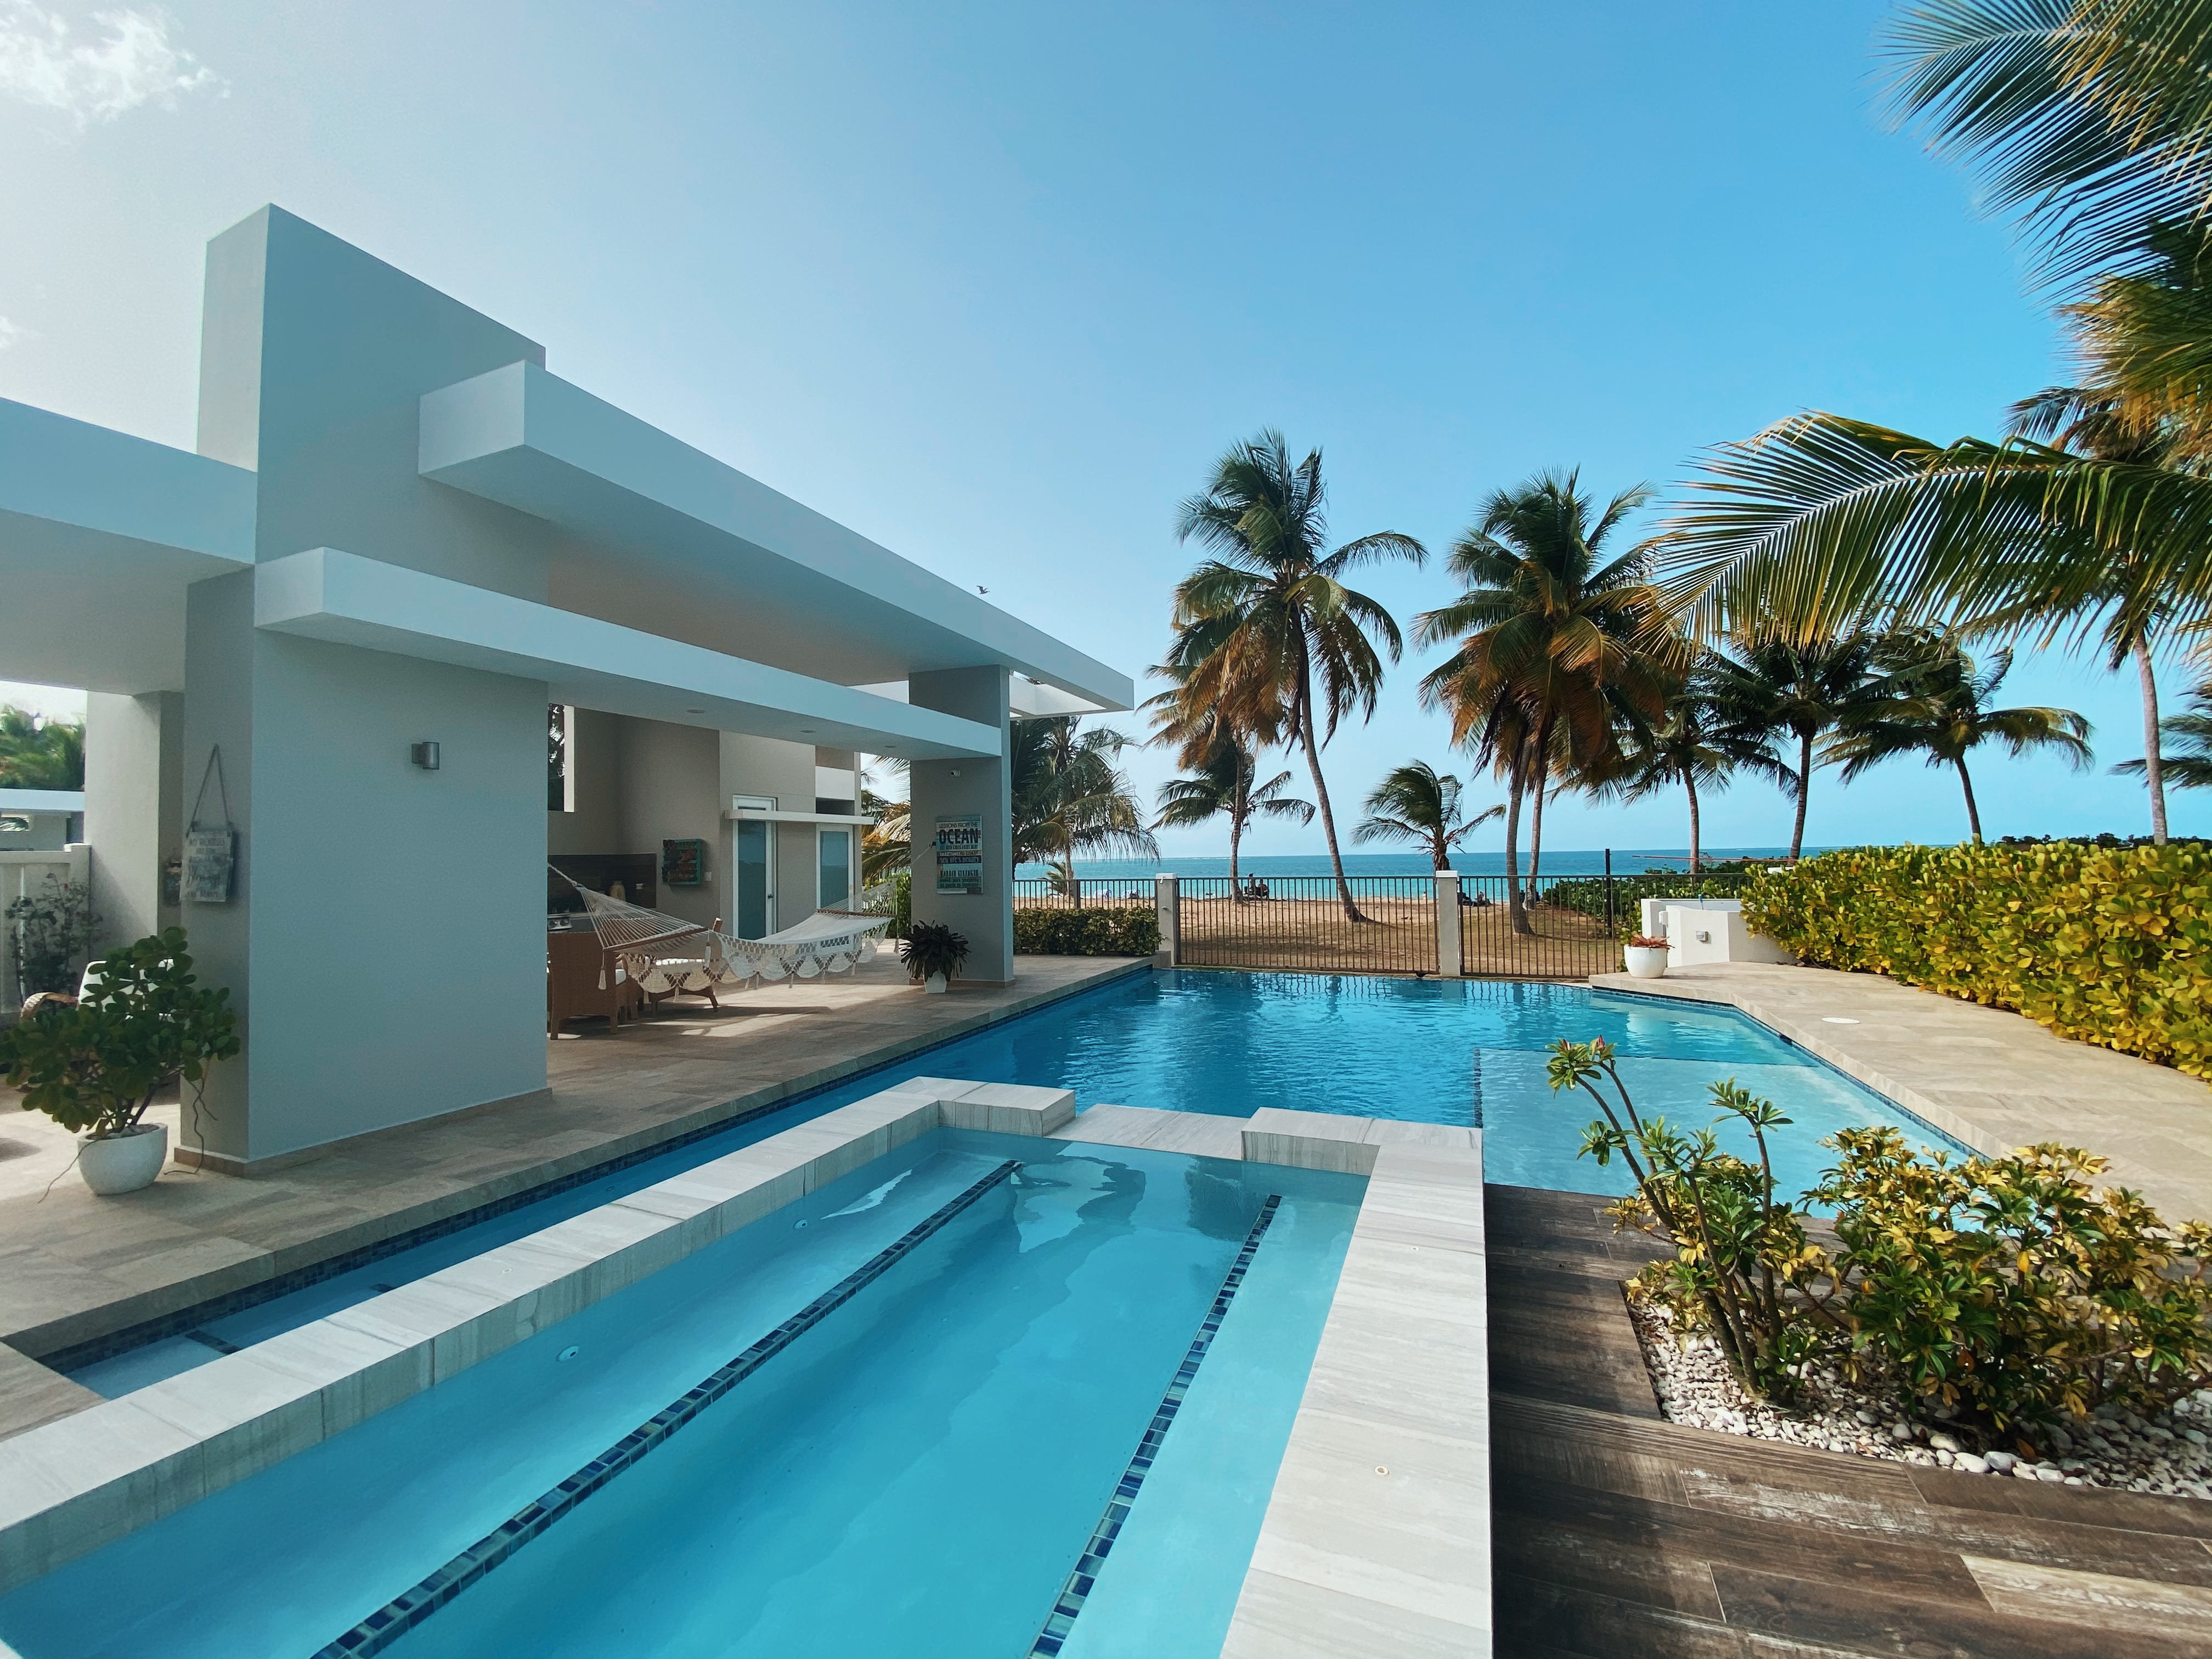 Ocean Eleven Luxurious Beachfront Pool House Villas For Rent In Rio Grande Rio Grande Puerto Rico